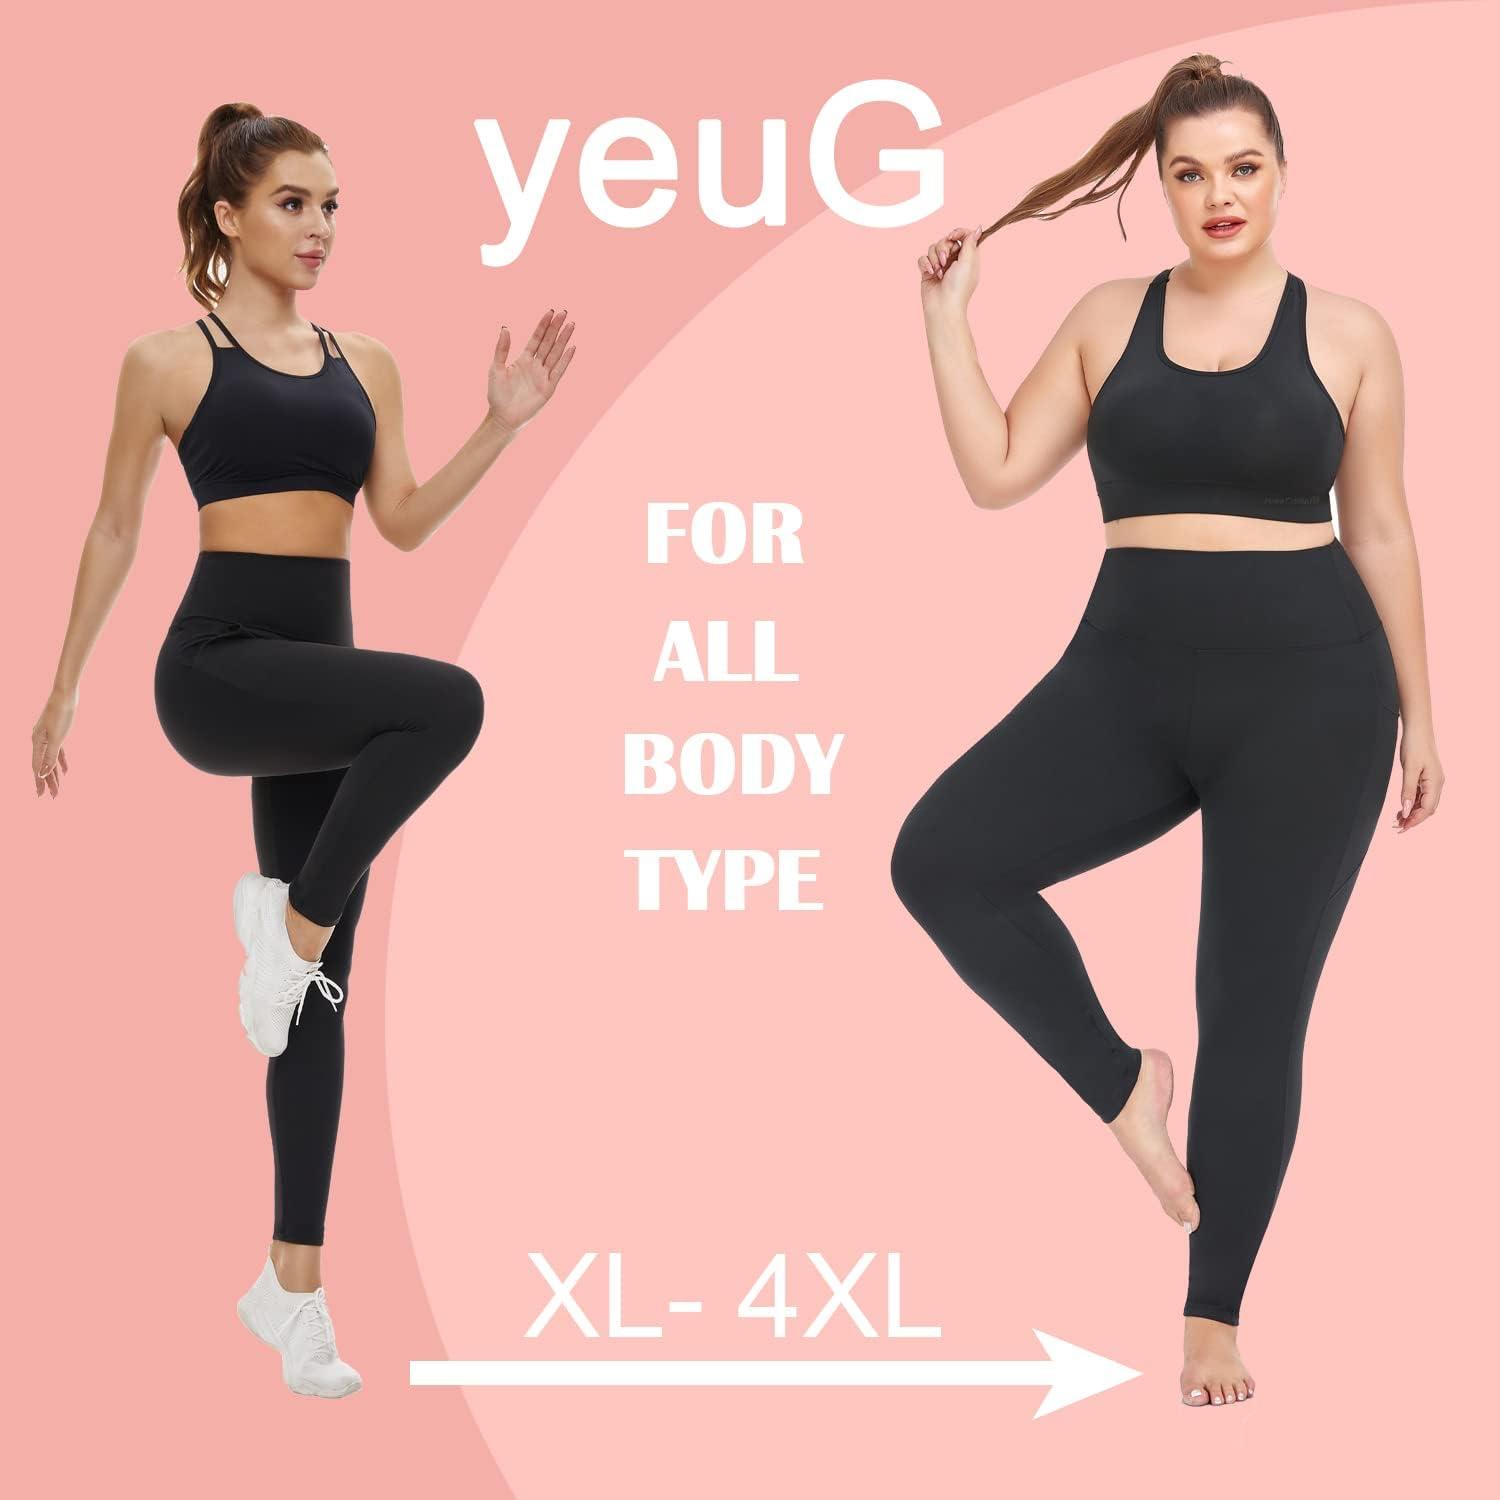  yeuG Plus Size Leggings for Women-Stretchy X-Large-4X Tummy  Control High Waist Spandex Workout Black Yoga Pants(Black,Grey(Long Length ),X-Large) : Clothing, Shoes & Jewelry